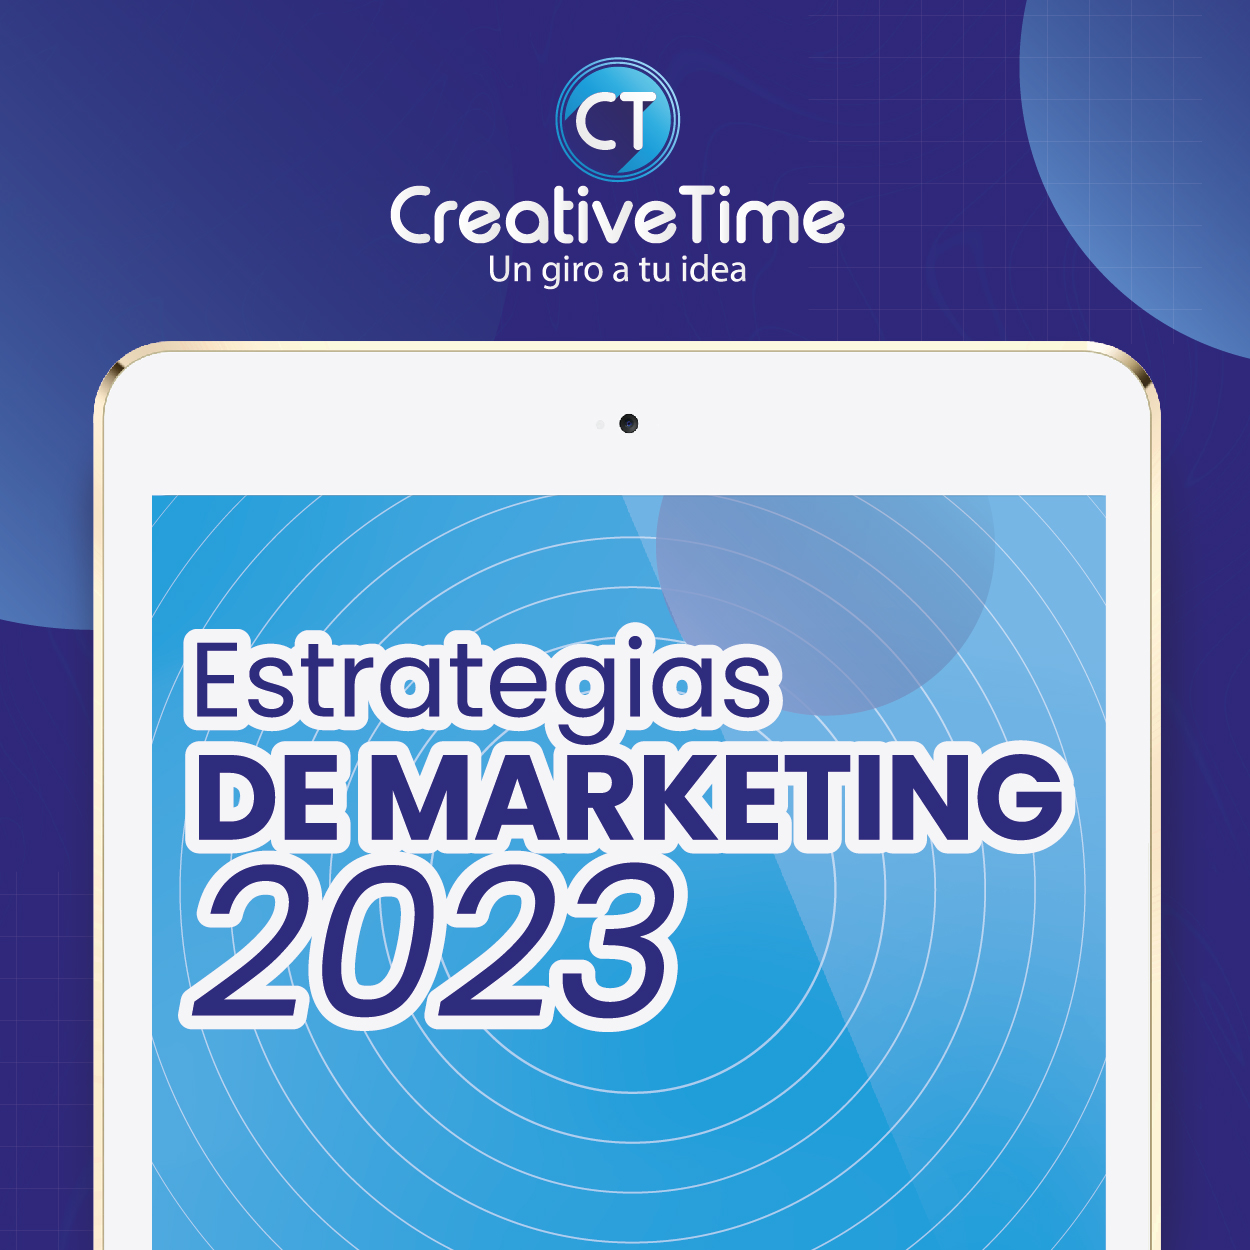 Estrategias de marketing 2023